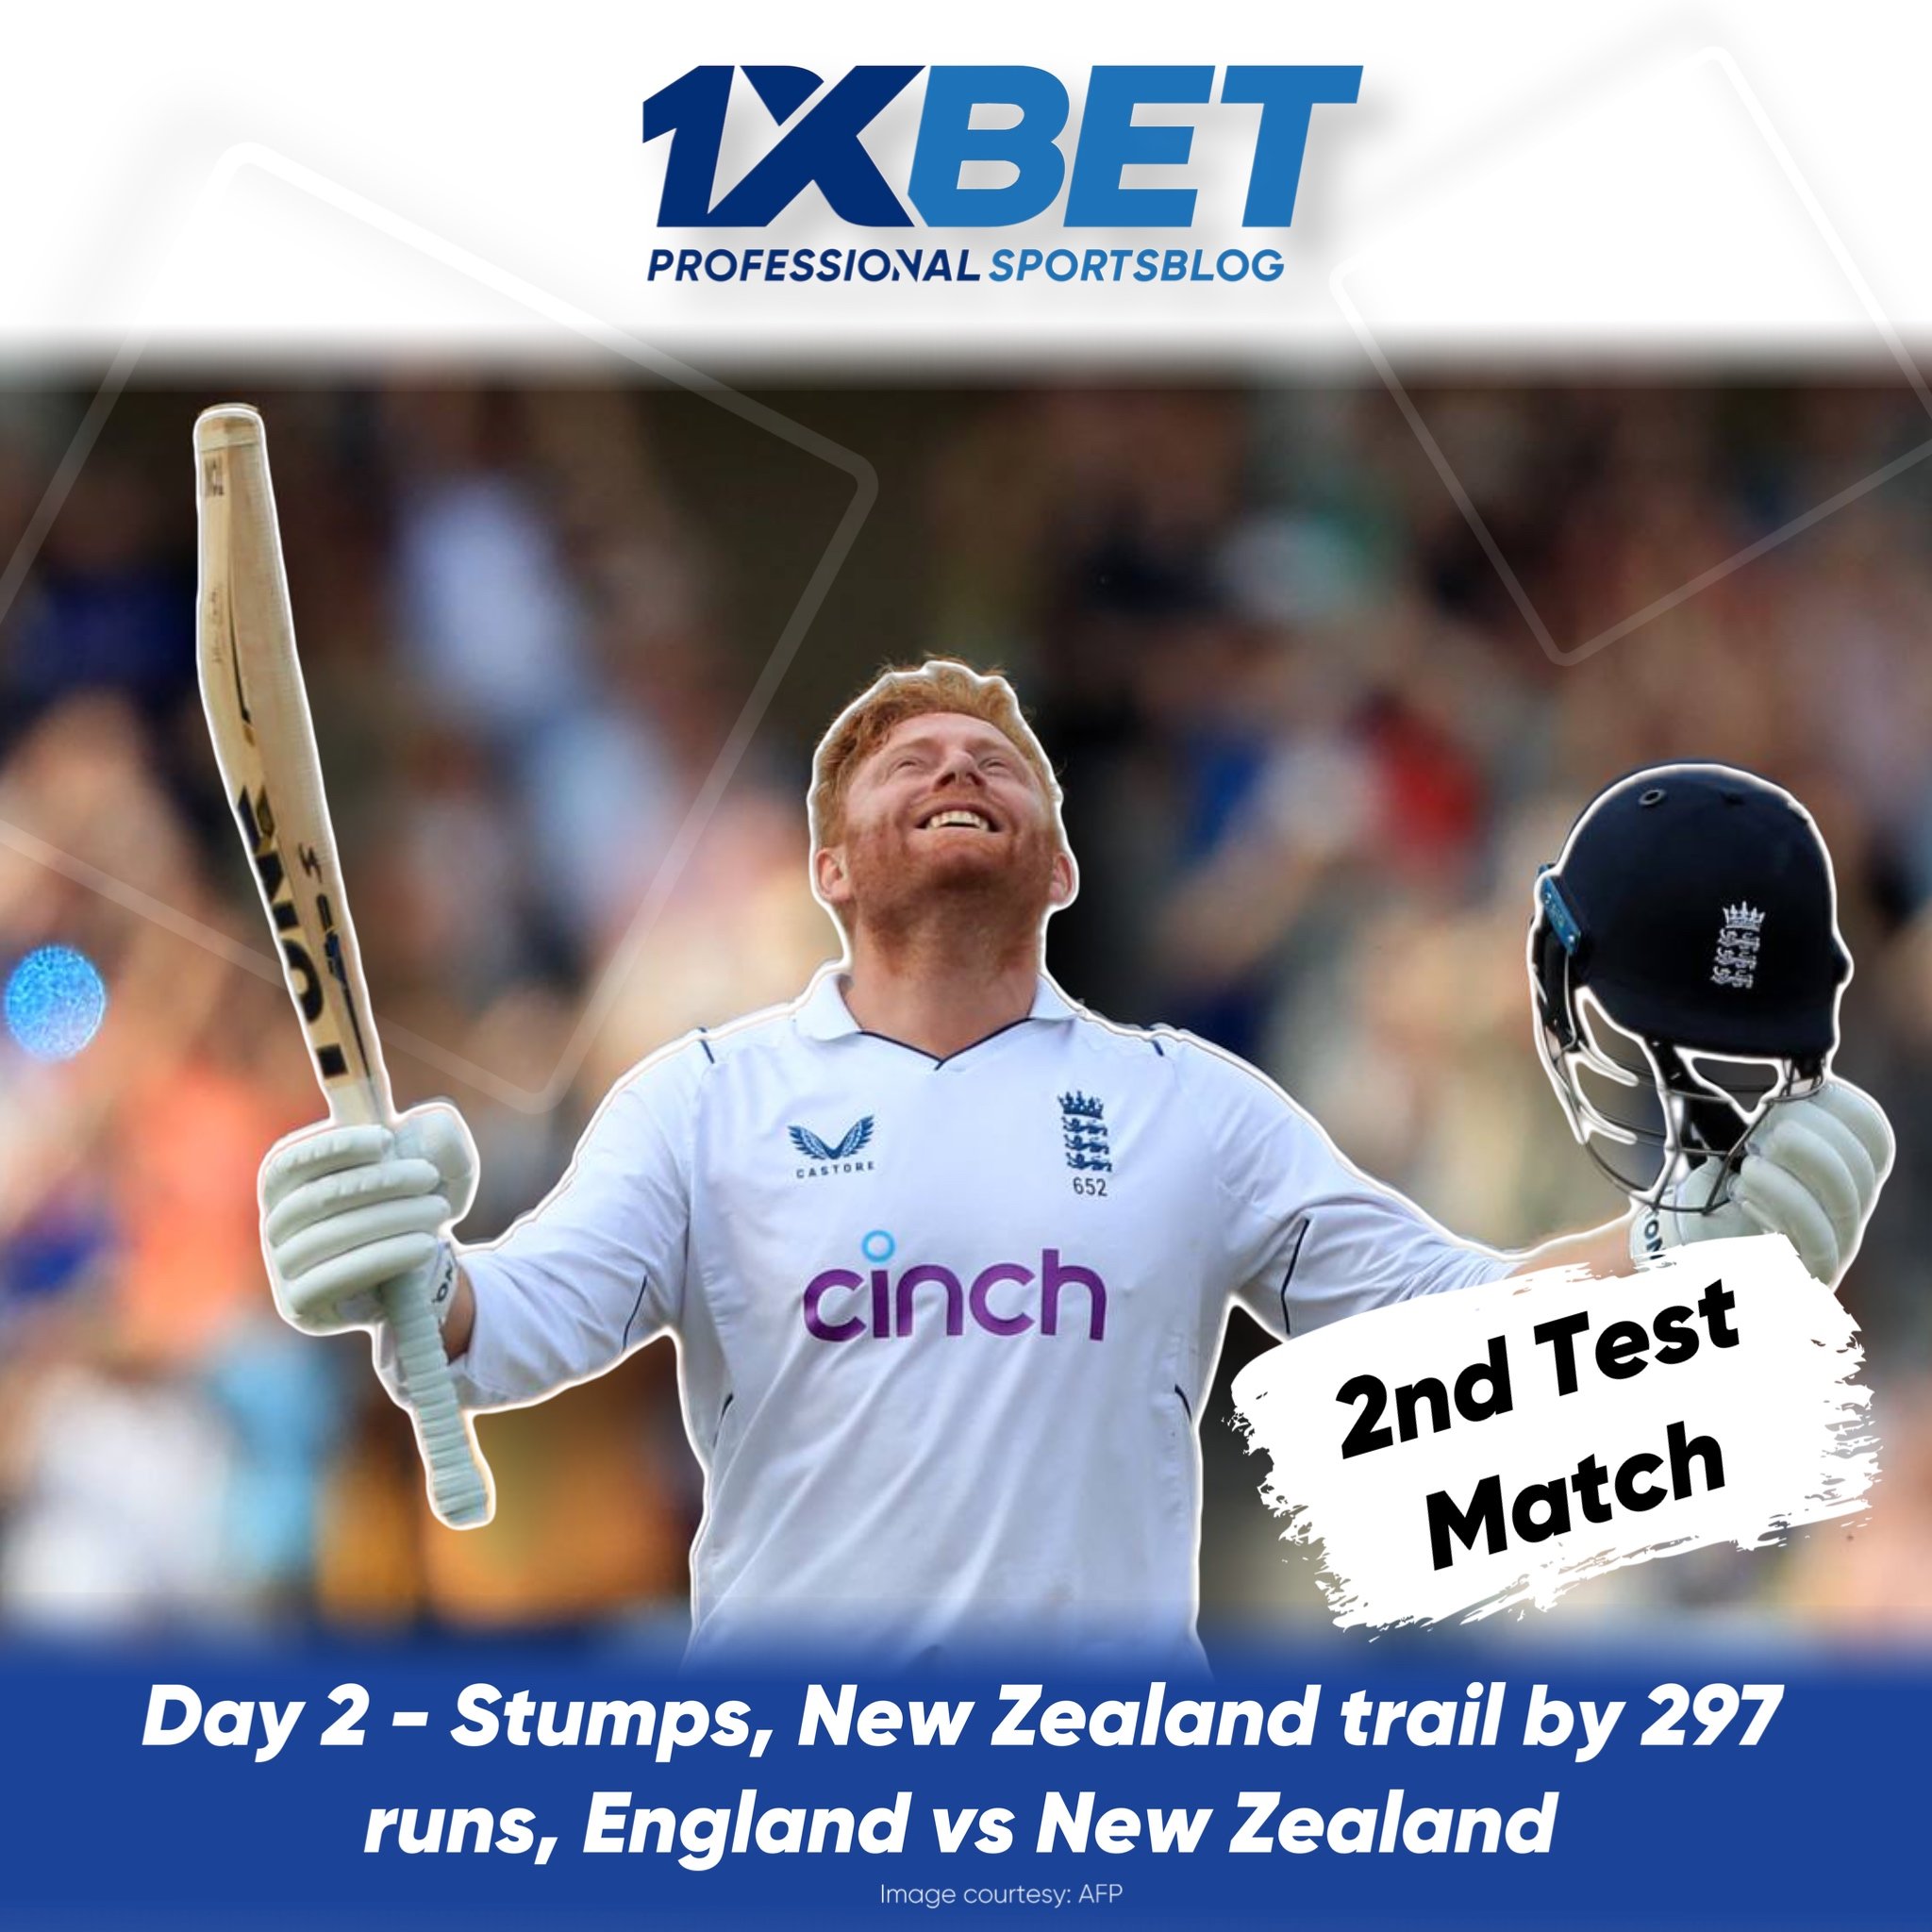 Day 2 - Stumps, New Zealand trail by 297 runs